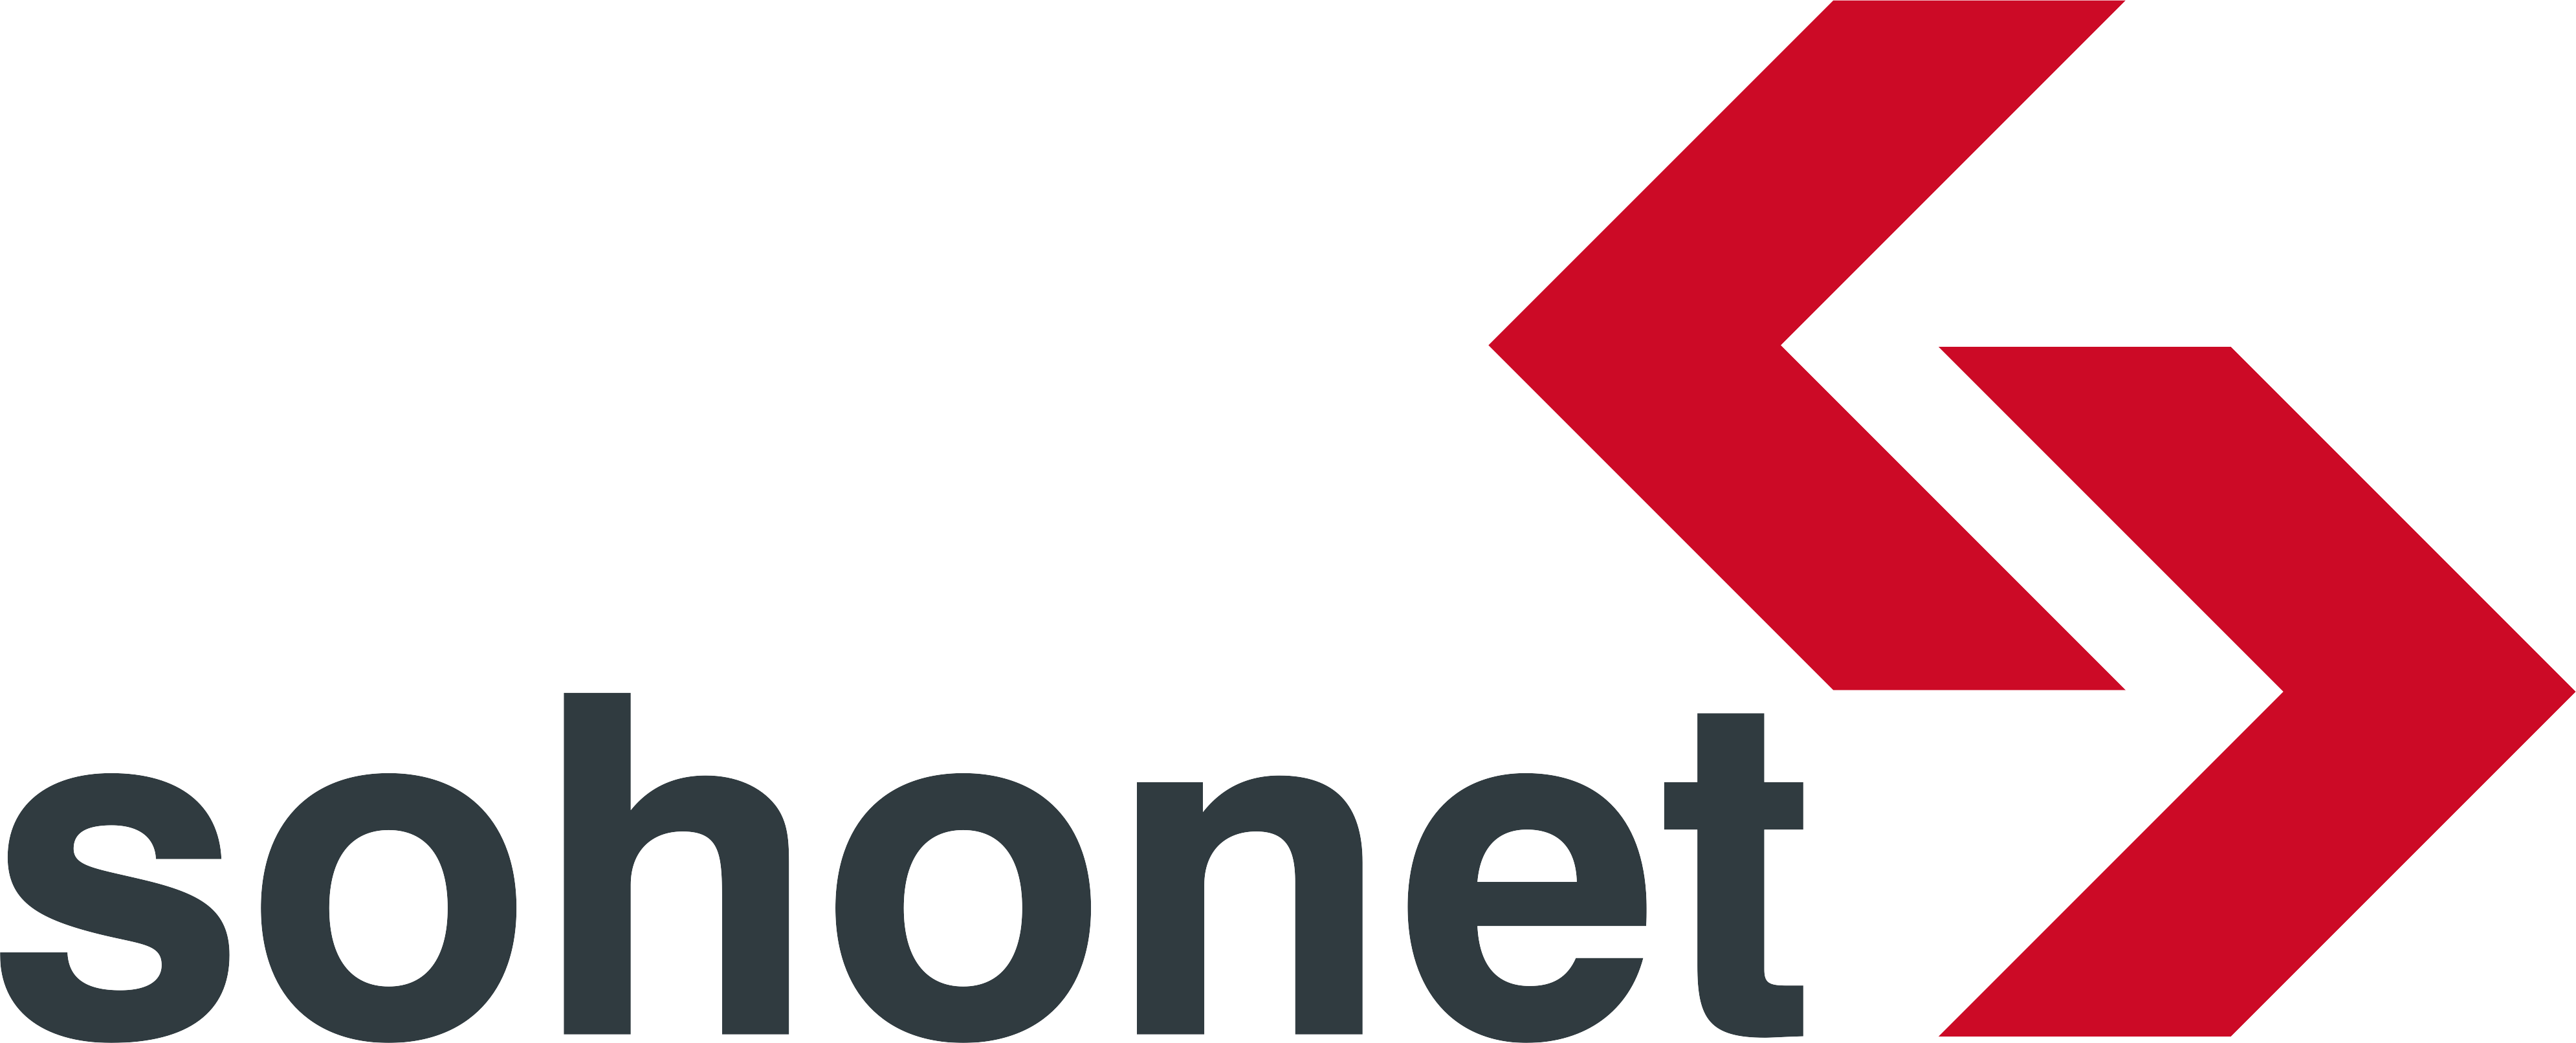 Sohonet Logo